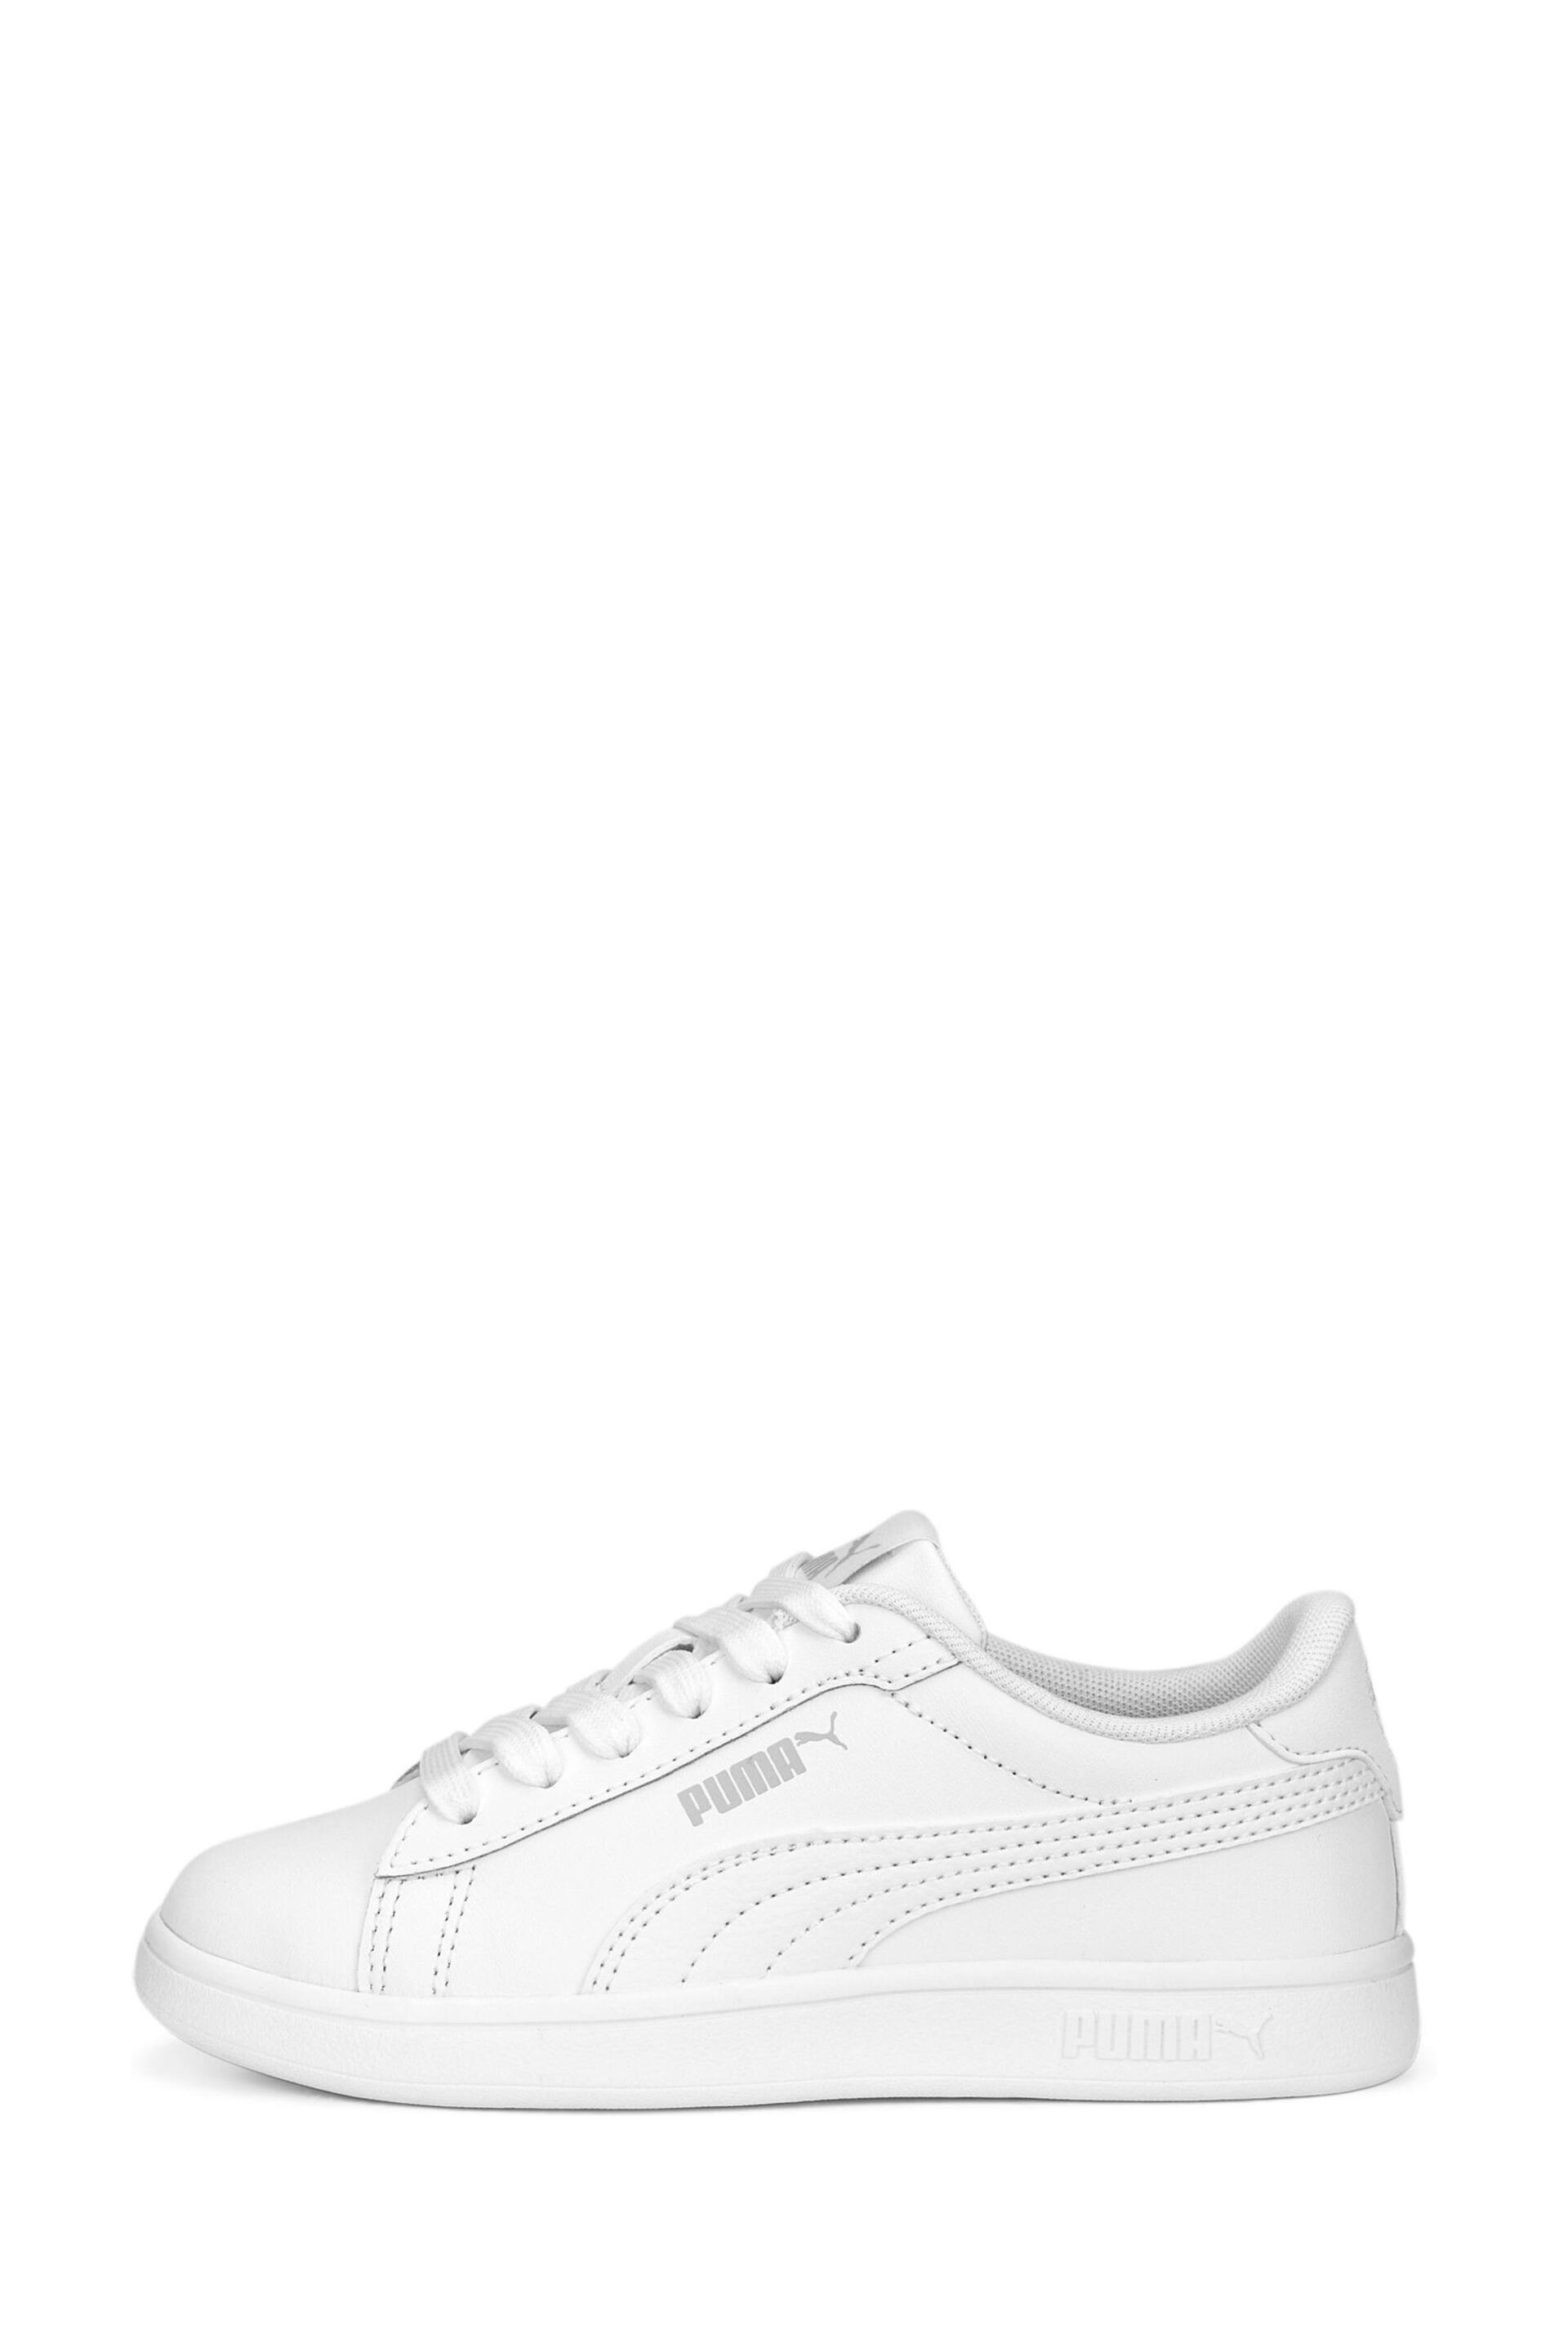 Puma White Smash 3.0 L Shoes - Image 2 of 6